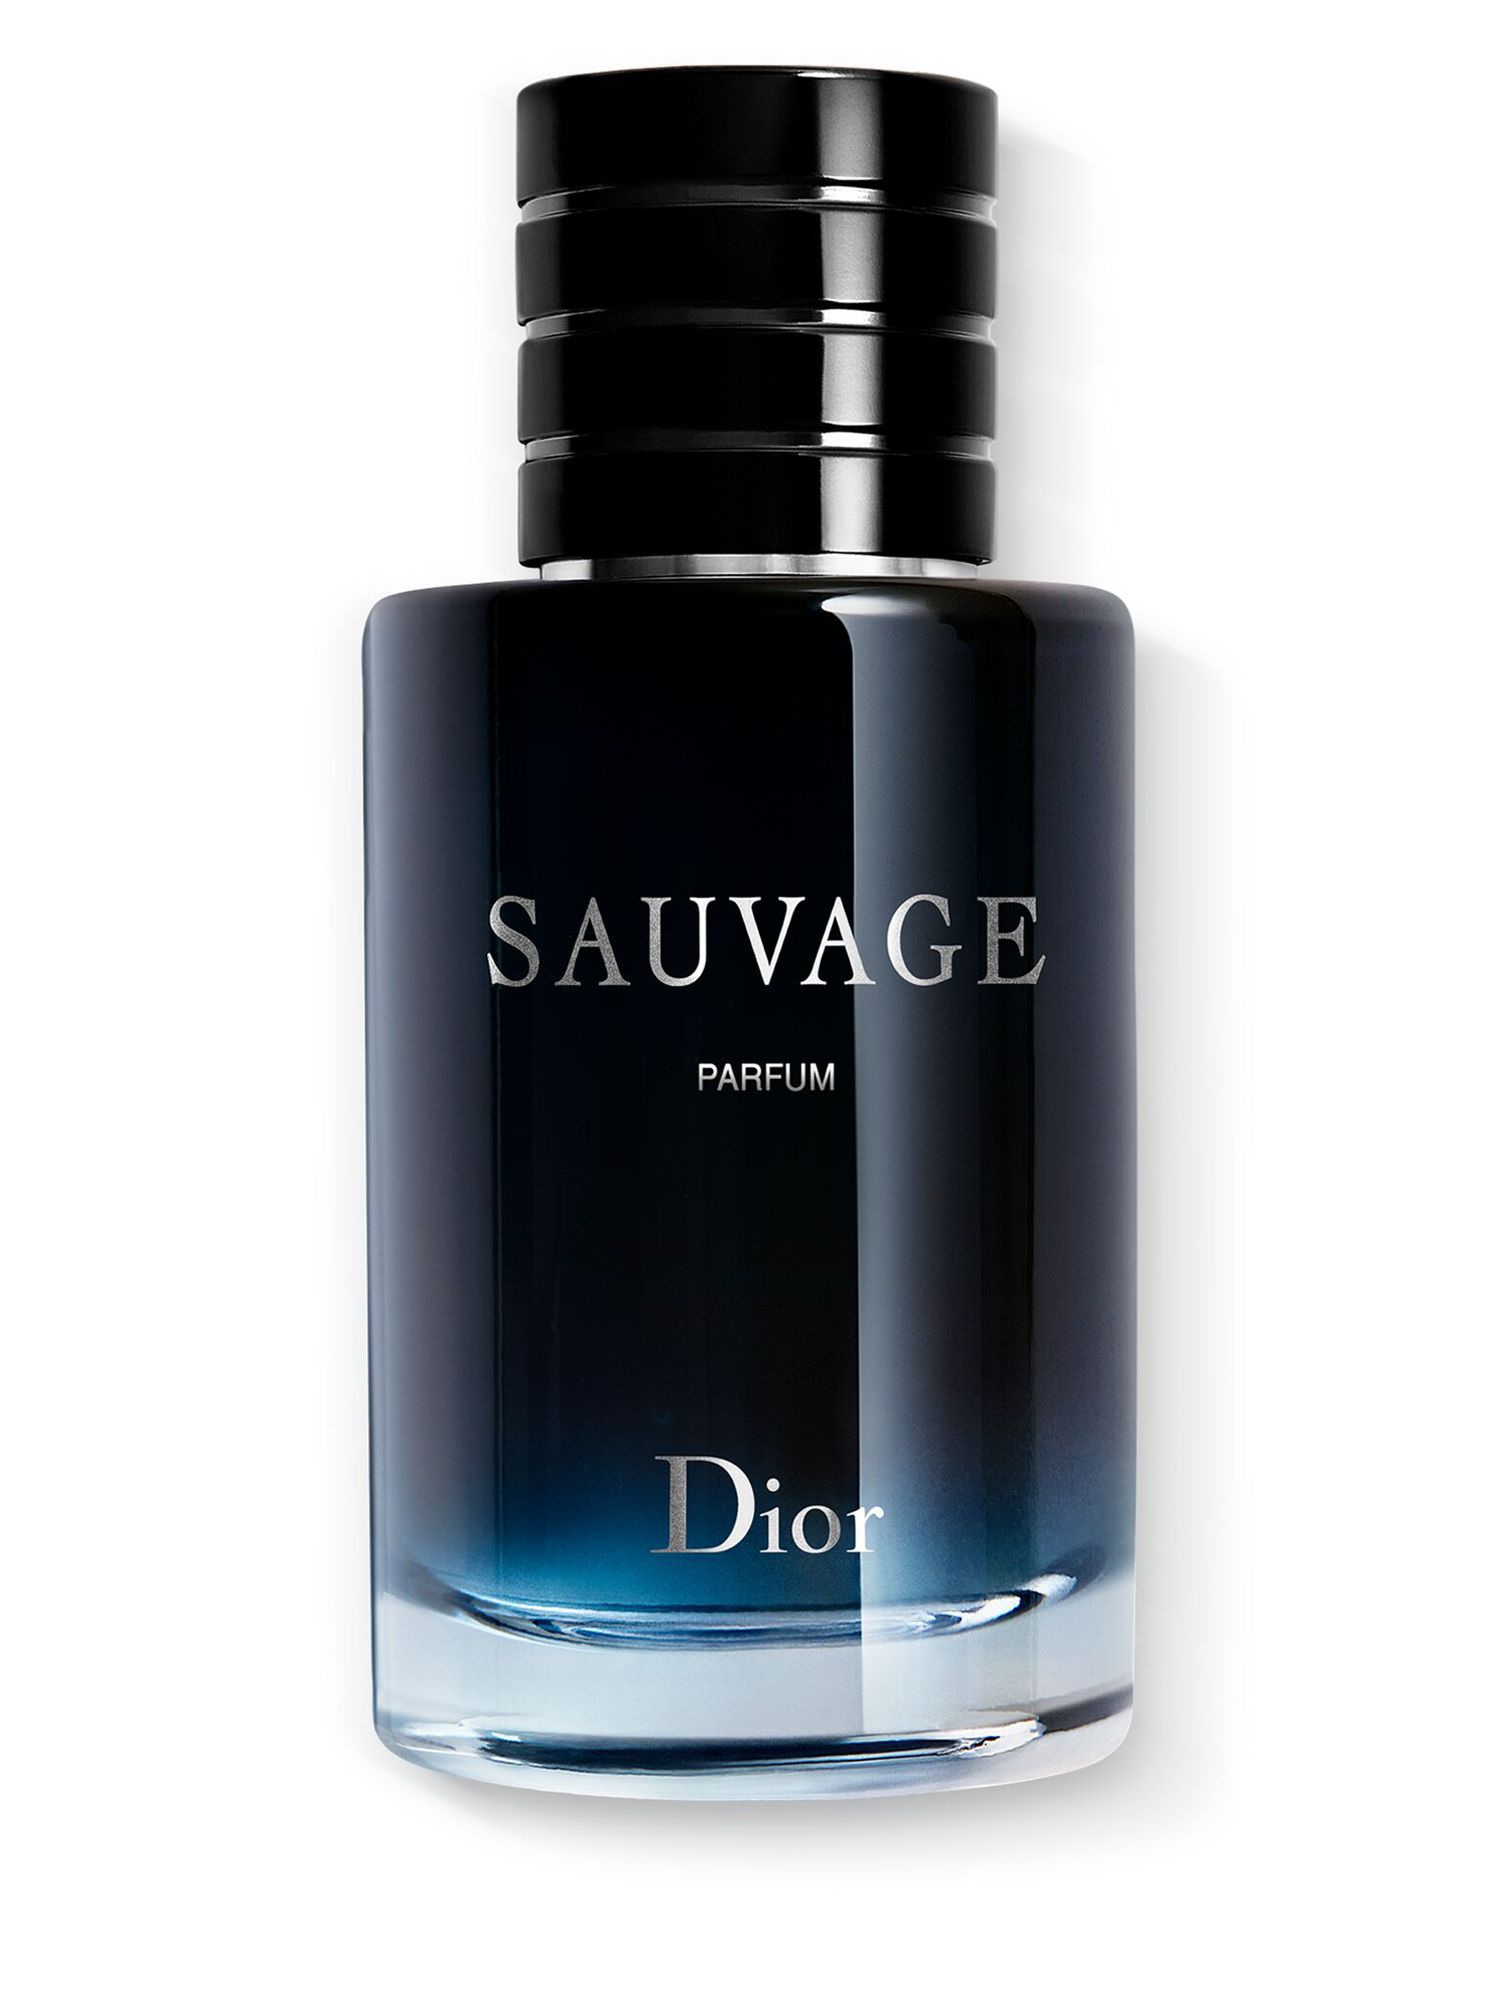 DIOR Sauvage Parfum, 60ml